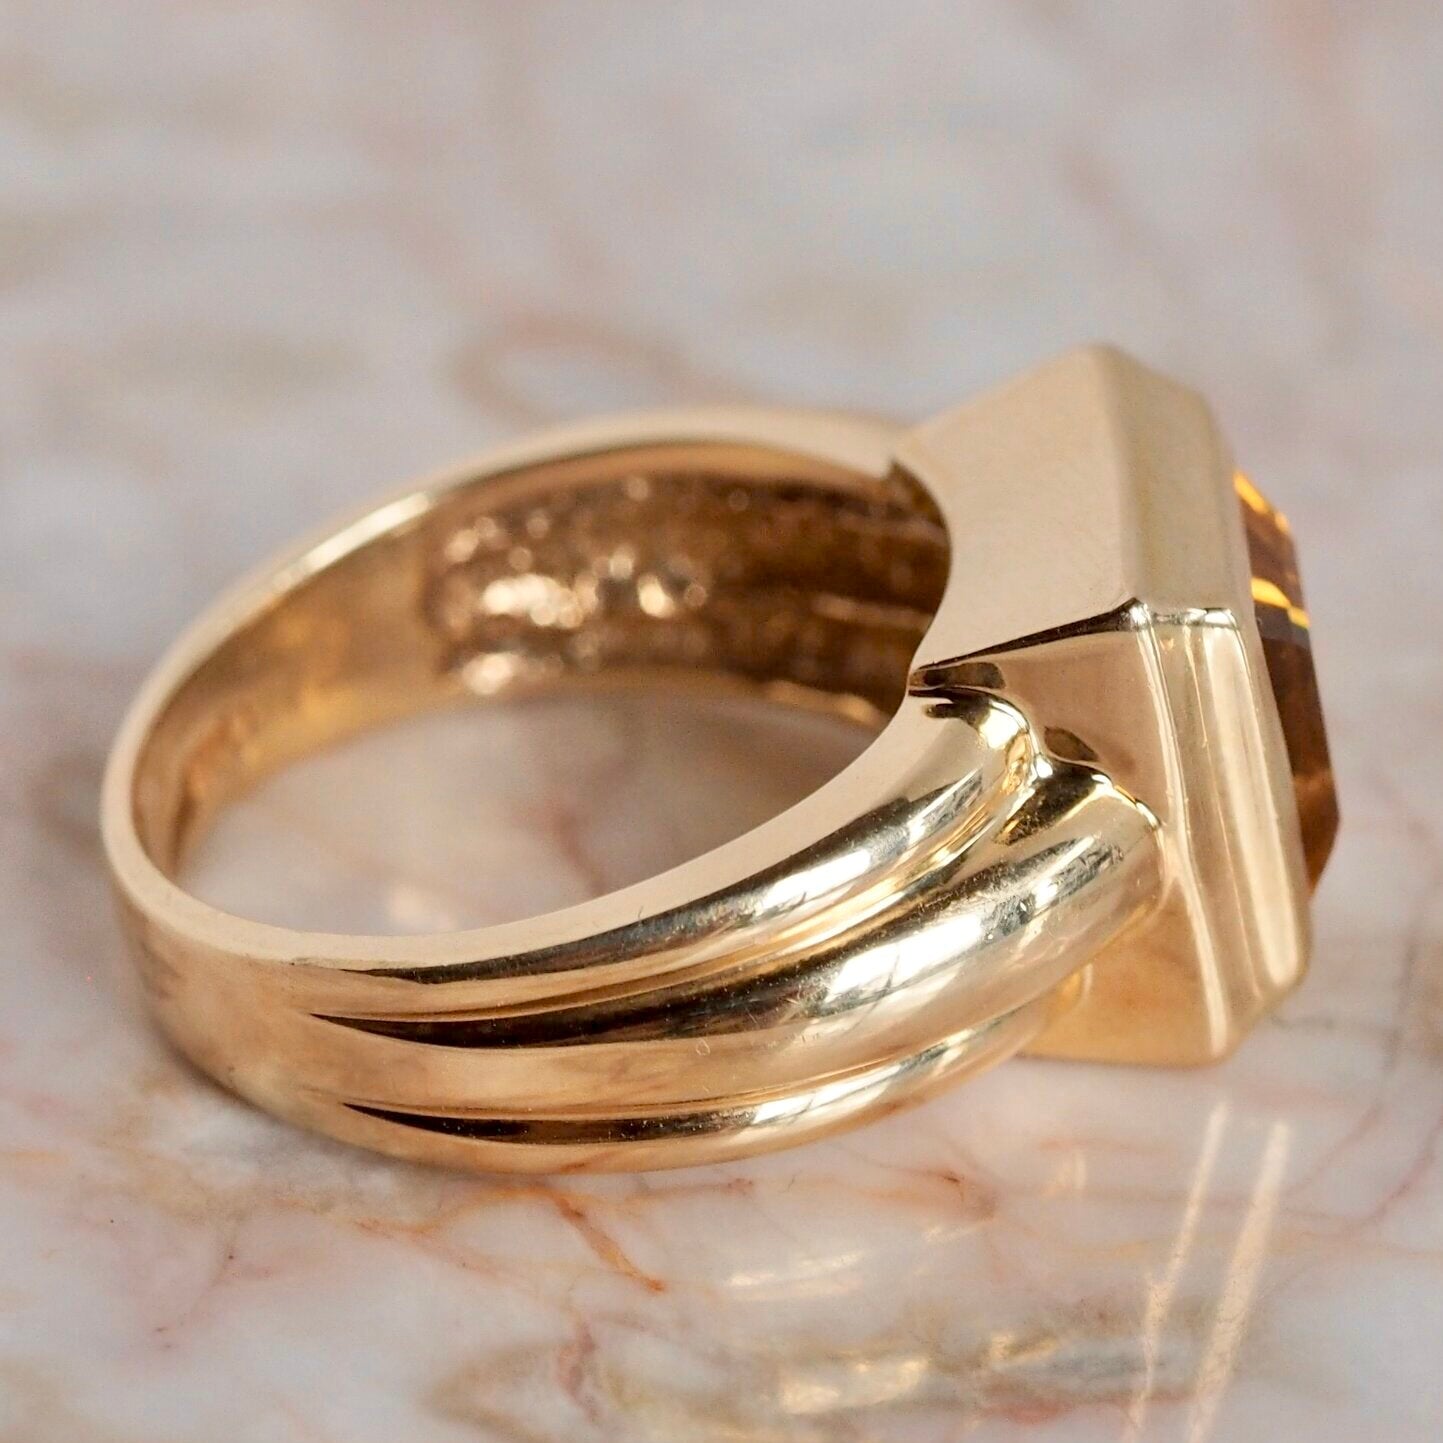 Vintage 14k Gold Citrine Ring